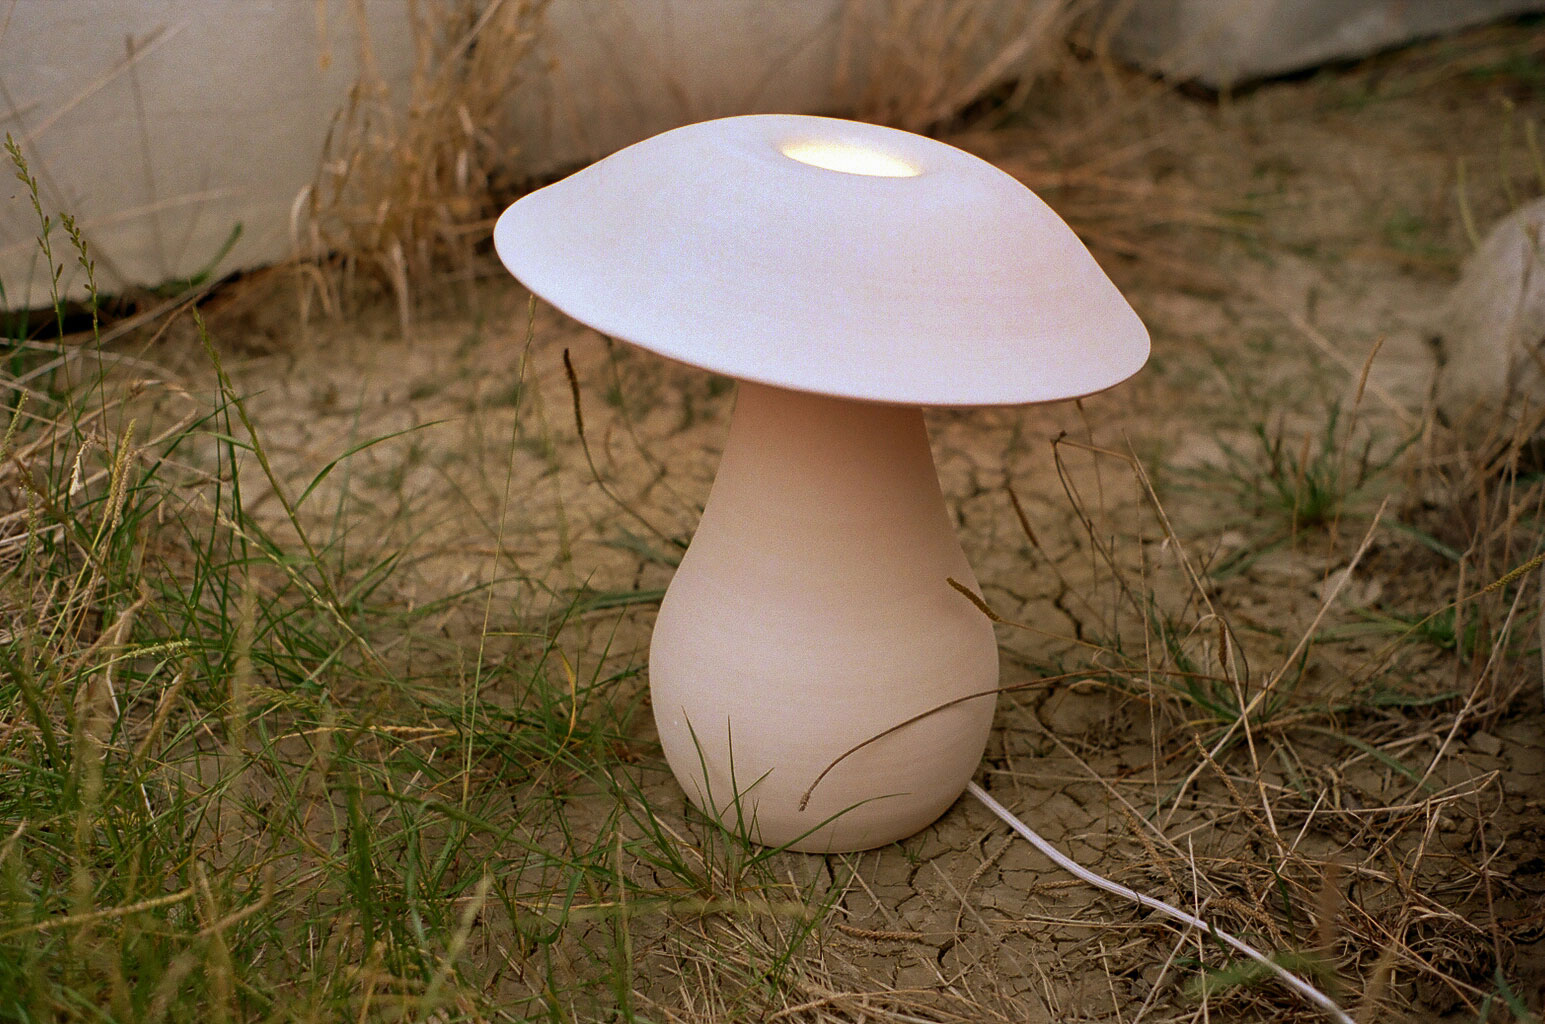 White Mushroom Lamp shot on the ground in the grass